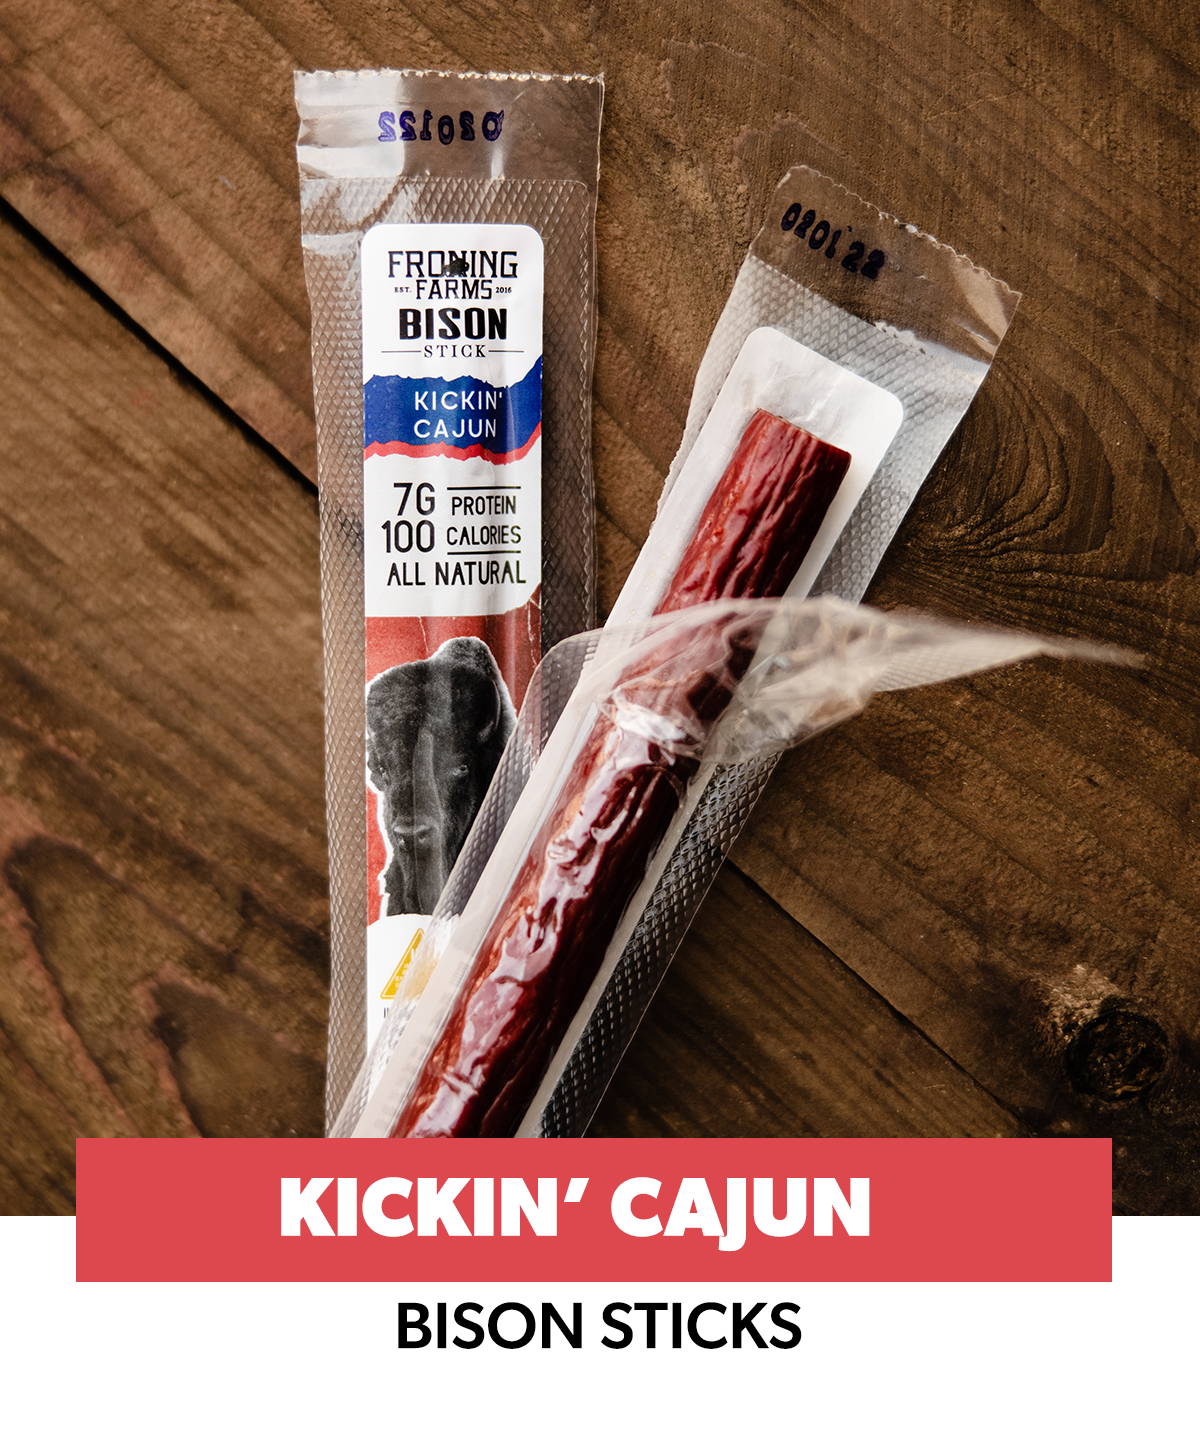 Froning Farms Bison Sticks Kickin' Cajun Flavor